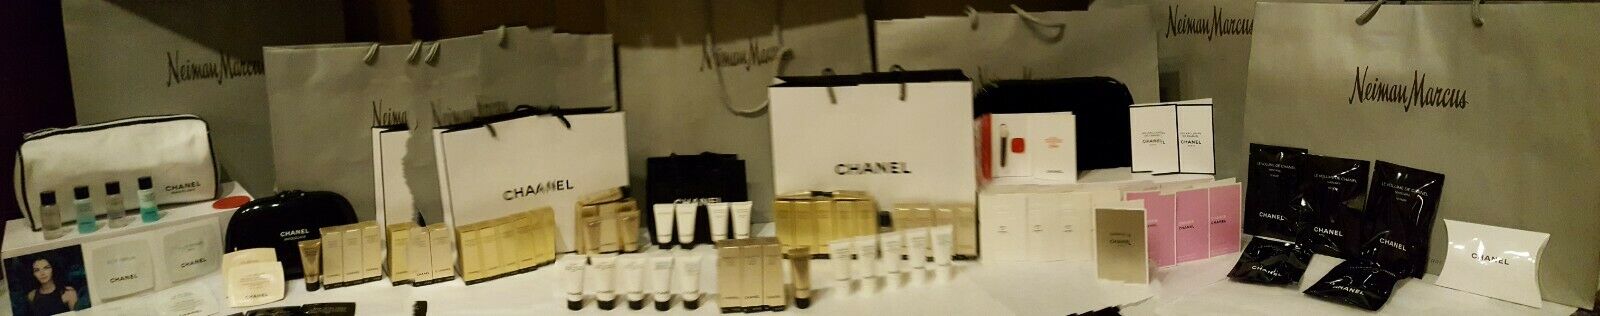 Chanel Lot of Skincare, Makeup and Perfume